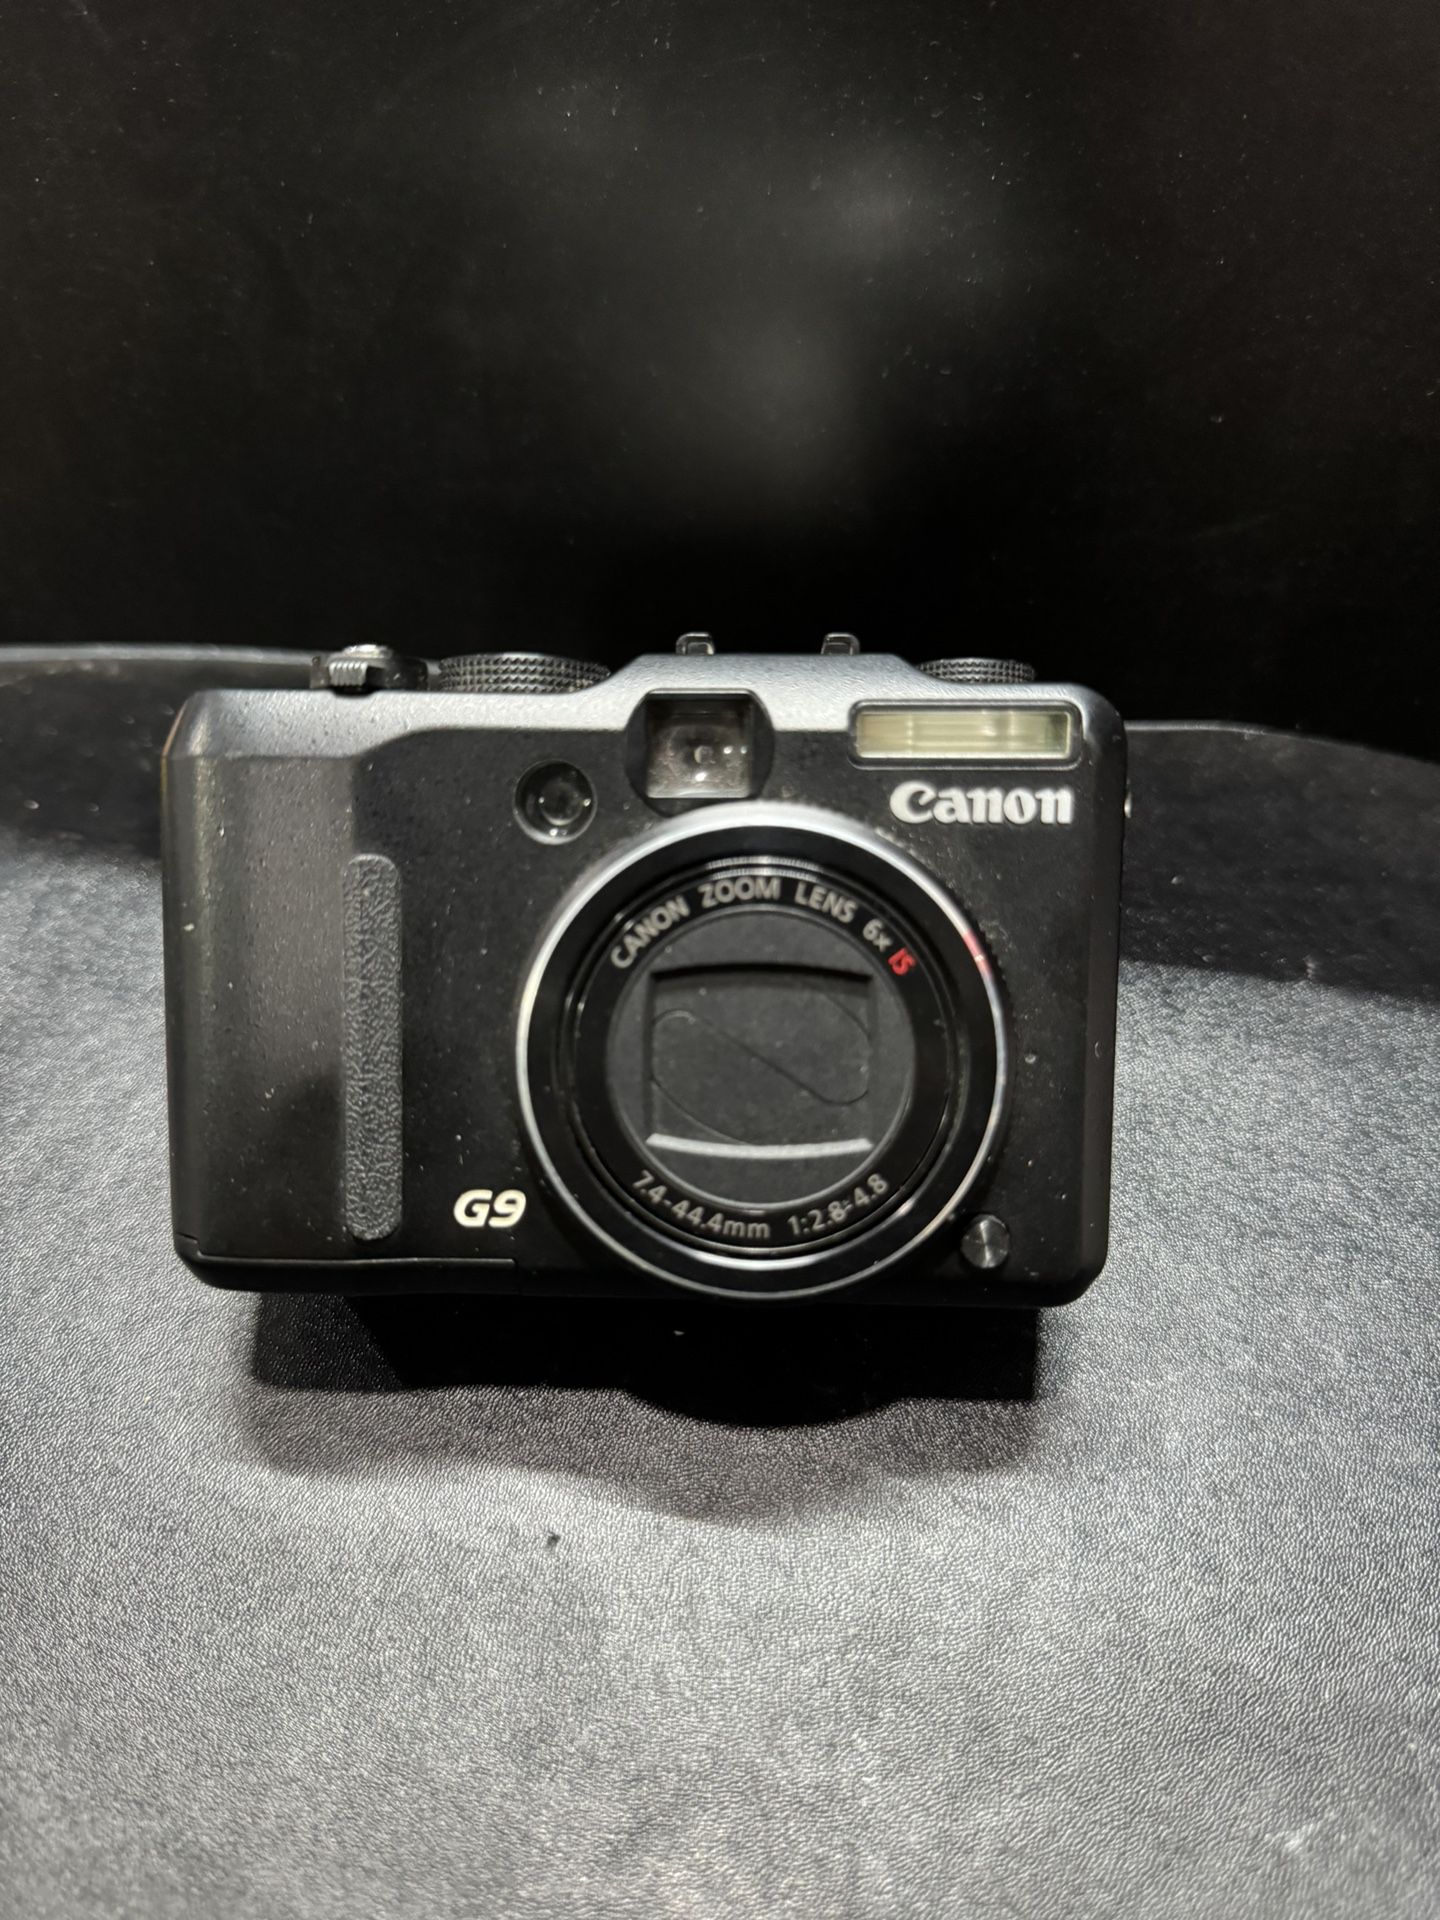 Canon PowerShot G9 12.1MP Digital Camera